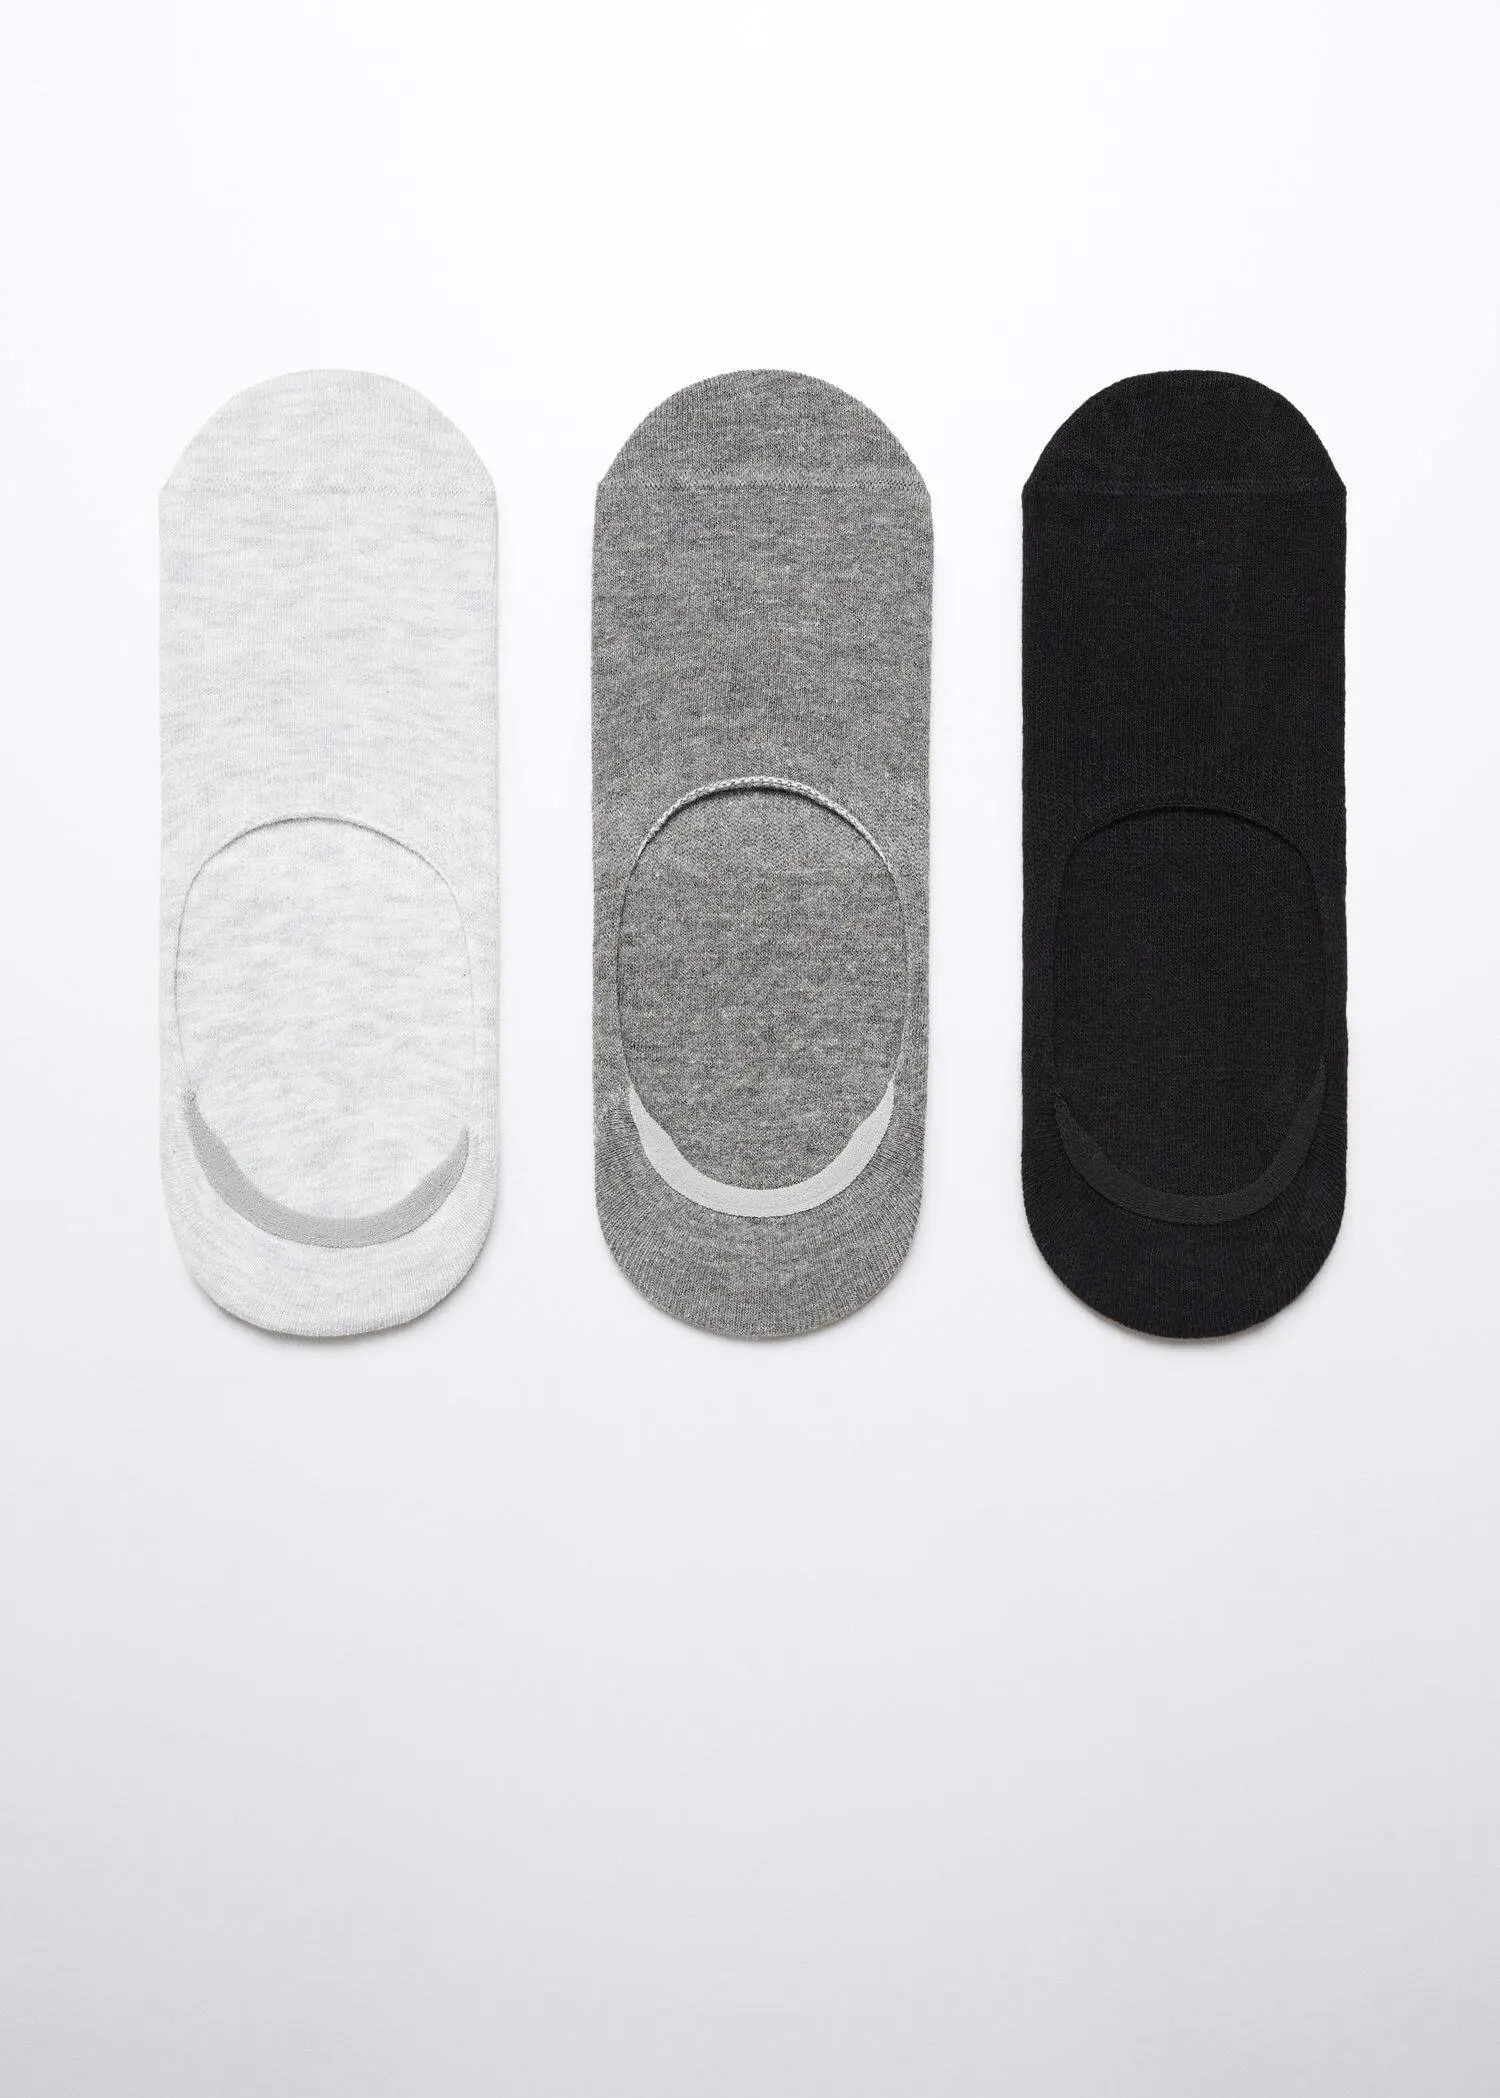 Mango 3-pack of invisible socks. three pairs of black, white, and gray socks. 